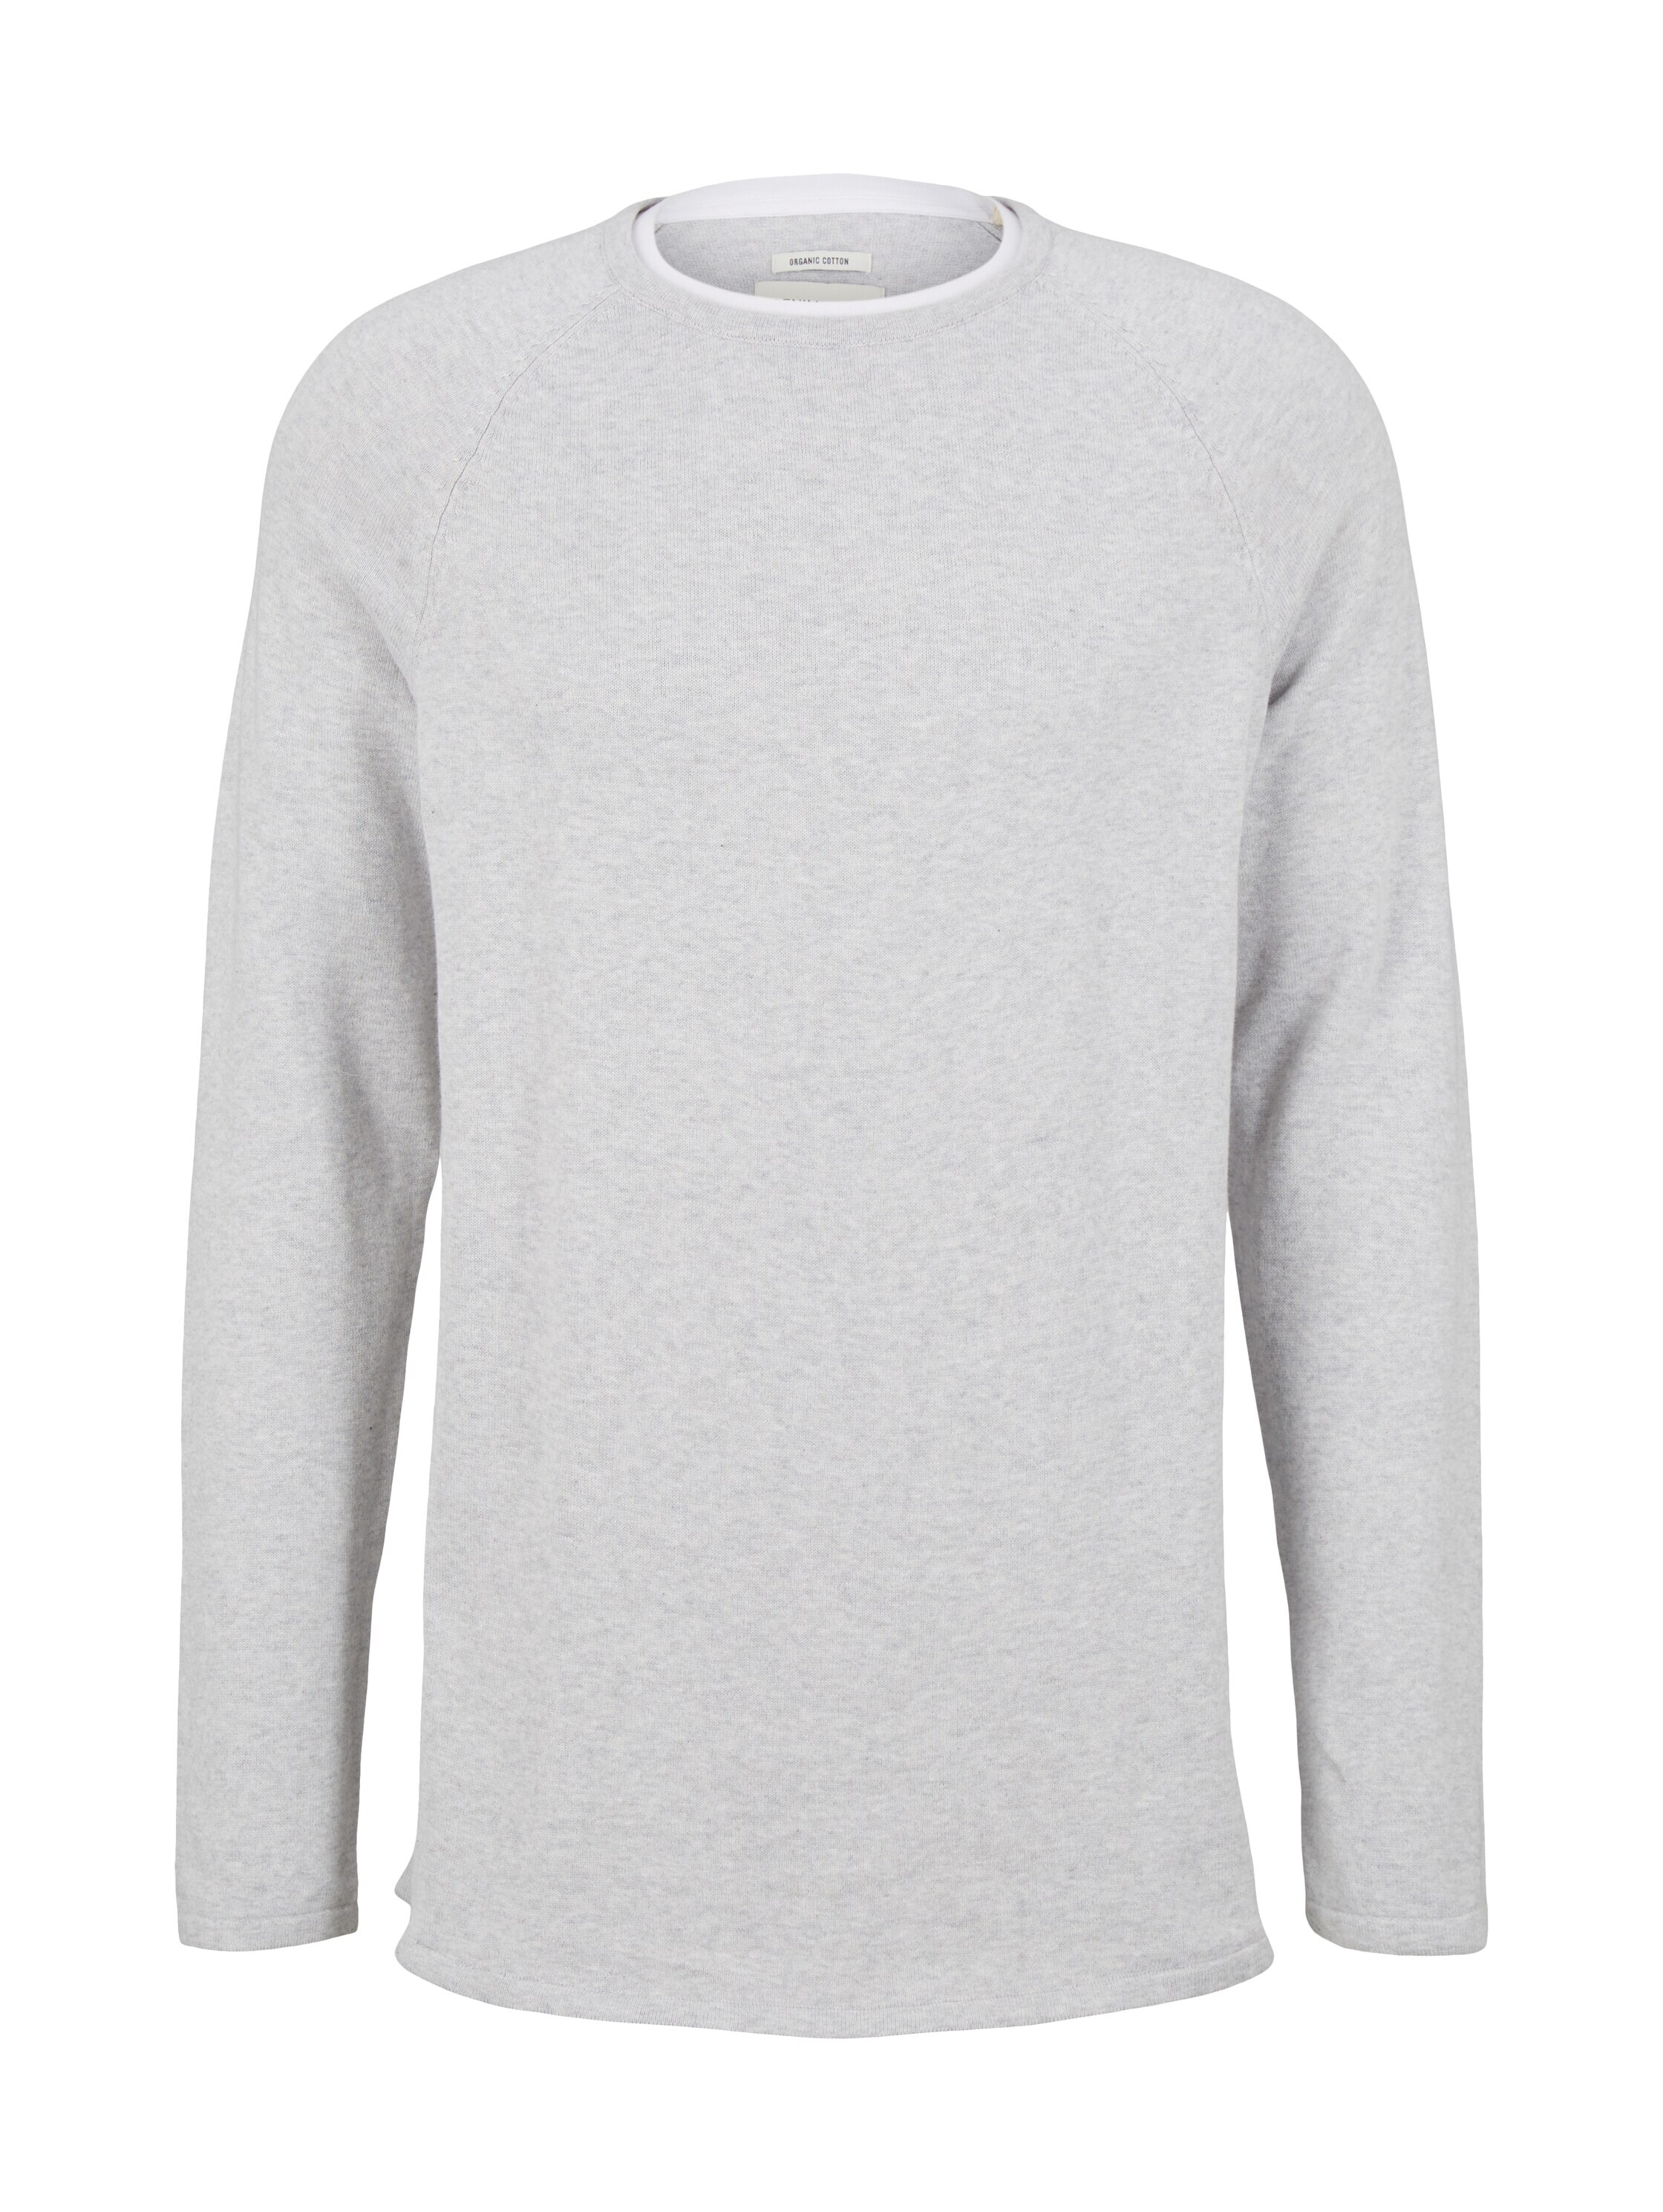 Пуловер Tom Tailor, серый пуловер tom tailor размер s серый